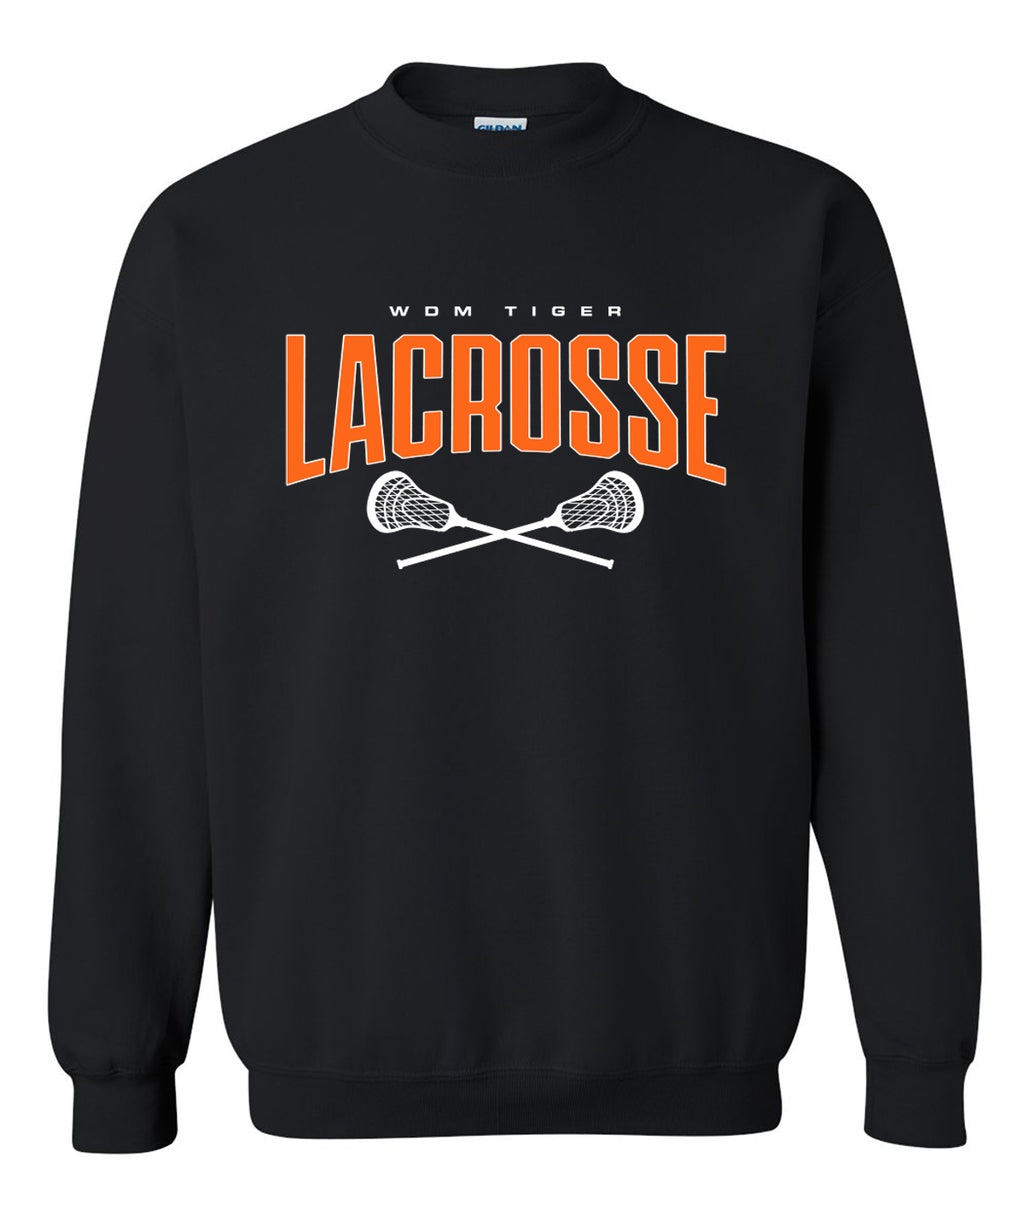 WDM Tiger Lacrosse Crewneck Sweatshirt